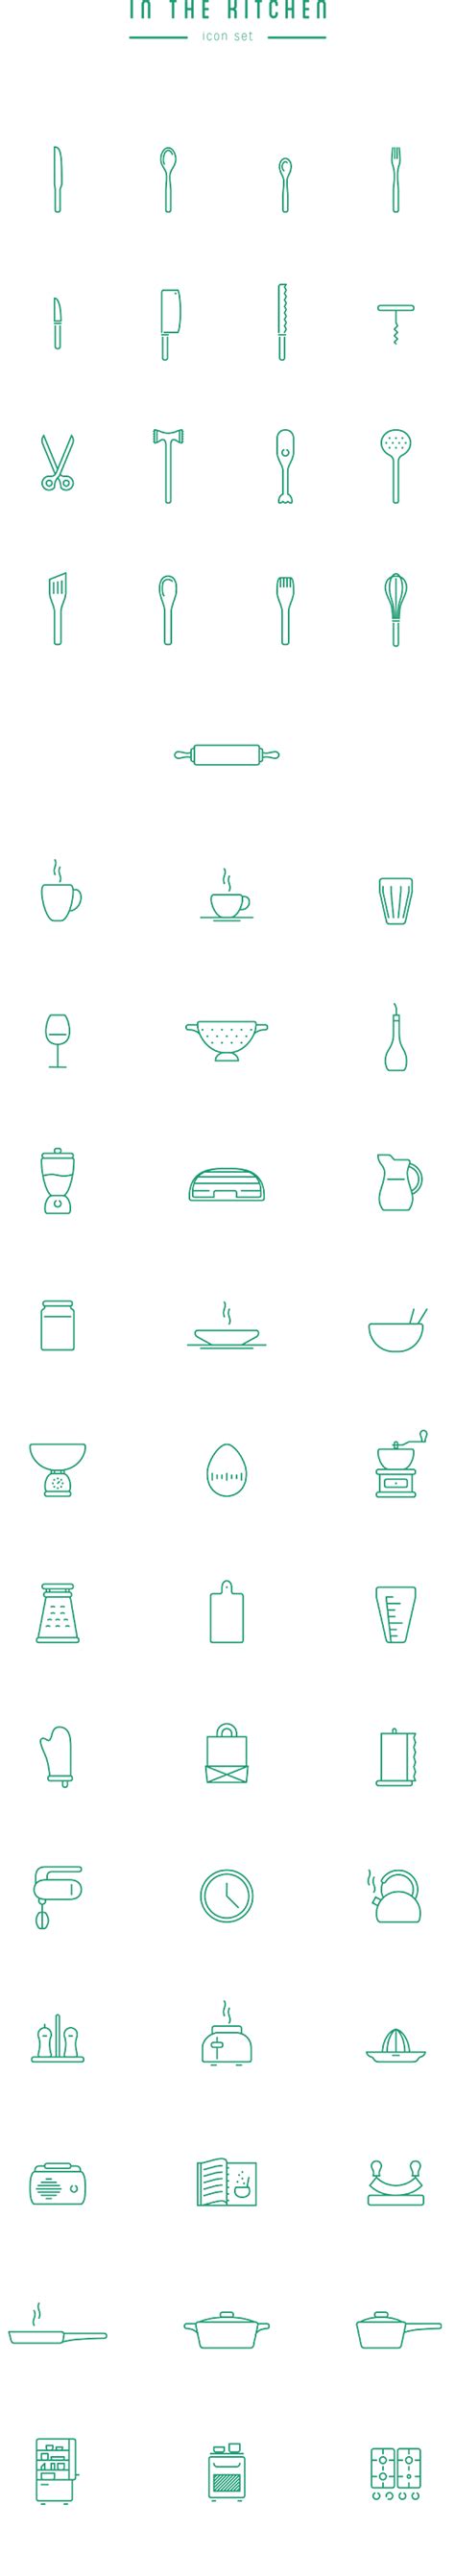 In The Kitchen - Free Icon Set by Wojciech Zasina, via Behance | Free icon set, Free icons, Icon set